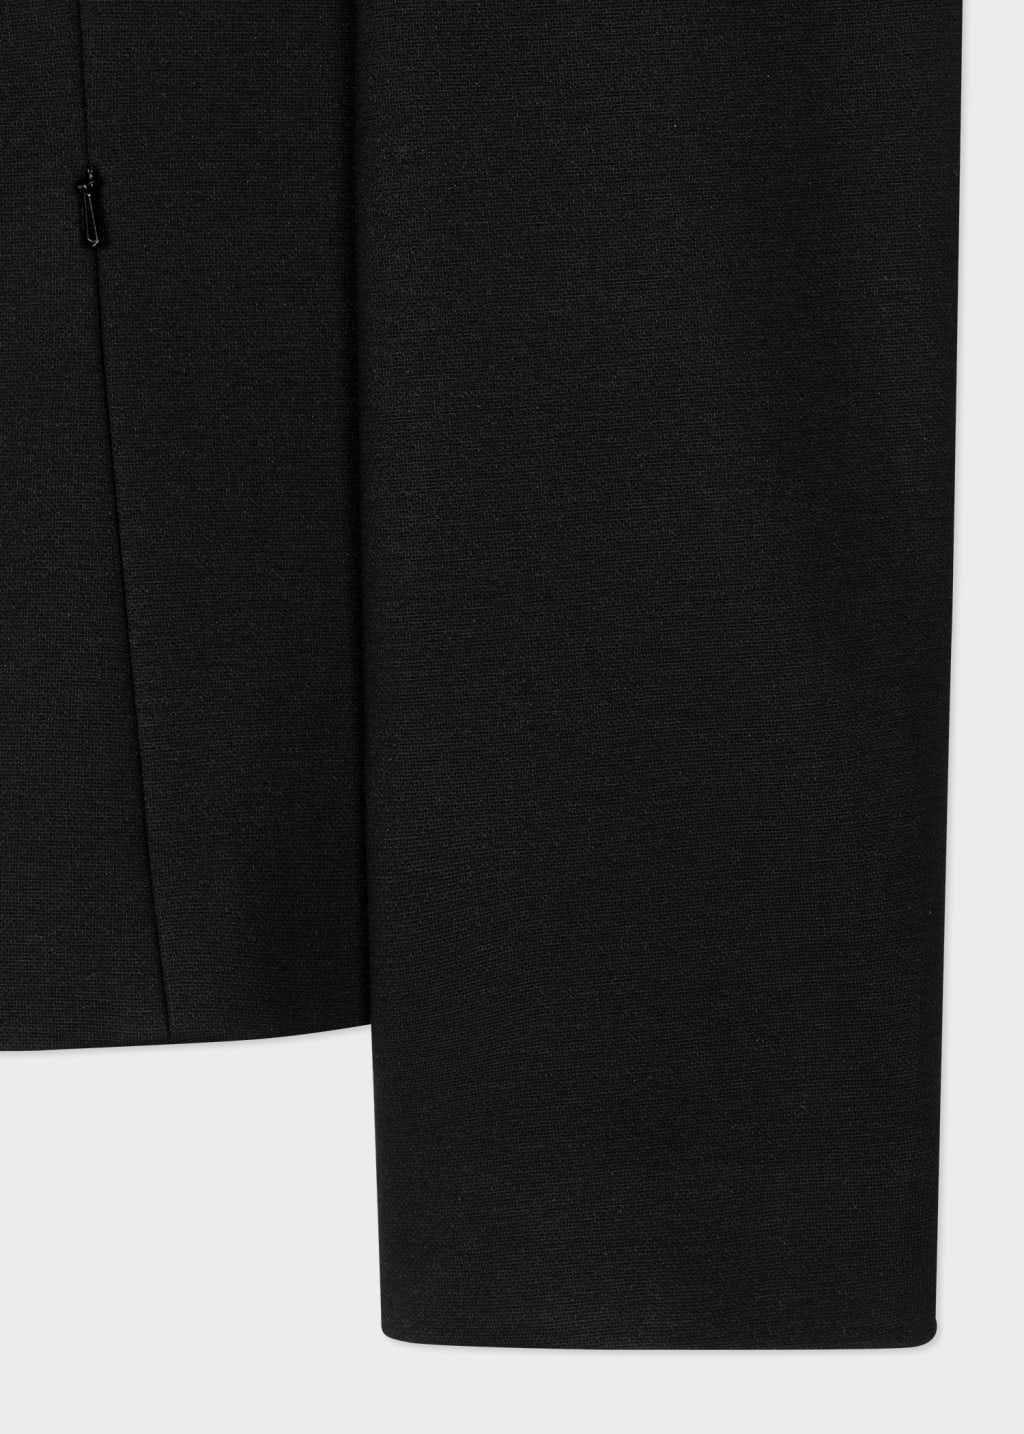 Product View - Women's Black 'Signature Stripe' Trim Jacket by Paul Smith